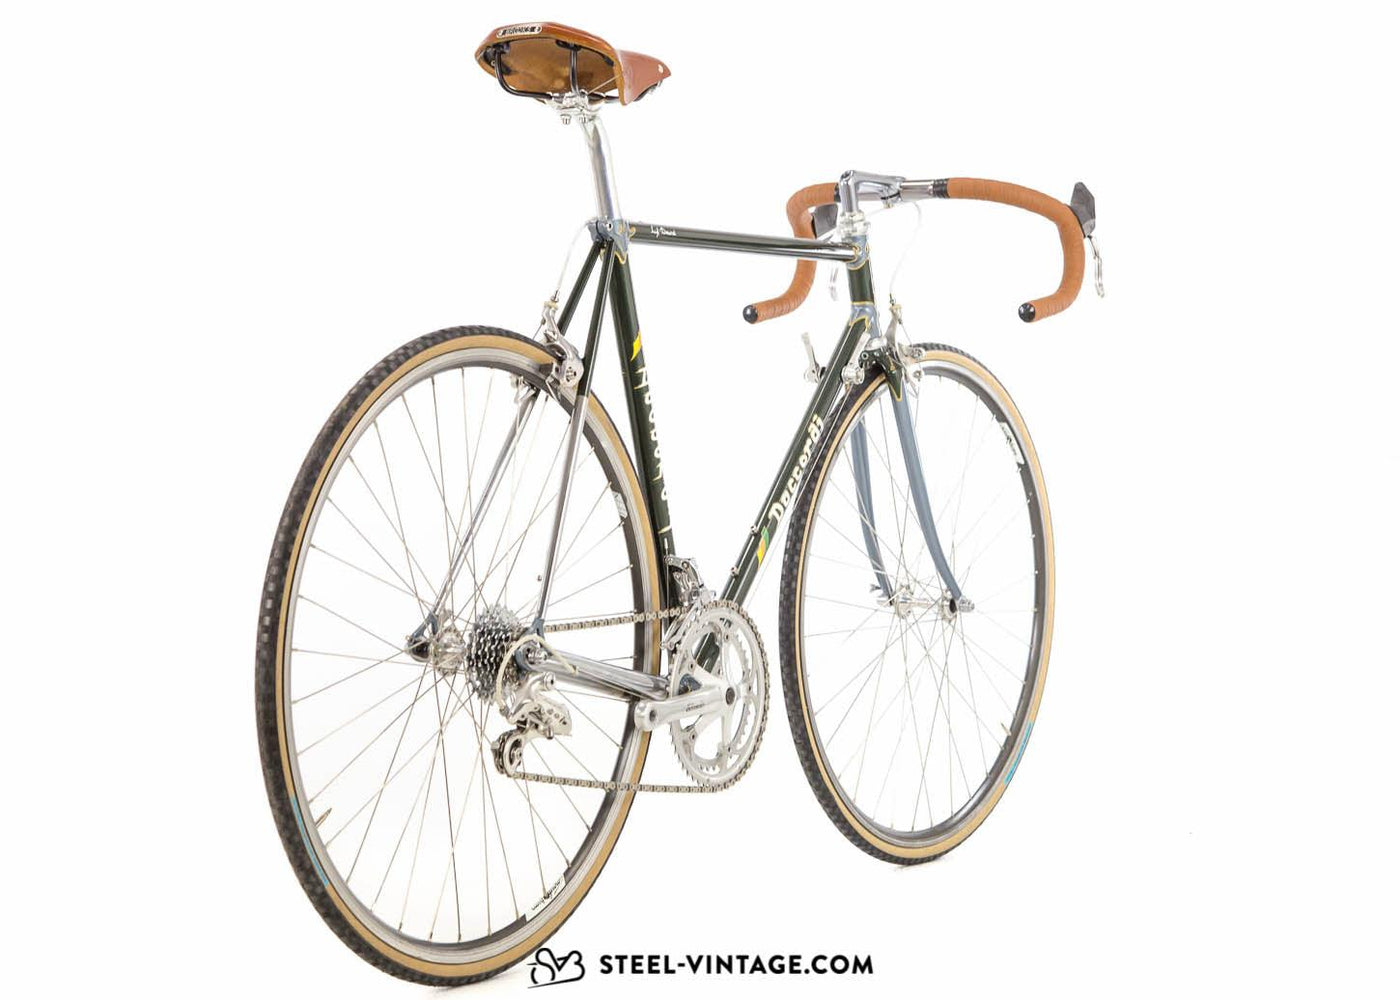 Steel Vintage Bikes - Daccordi SLX クラシックロードバイク 1990年代